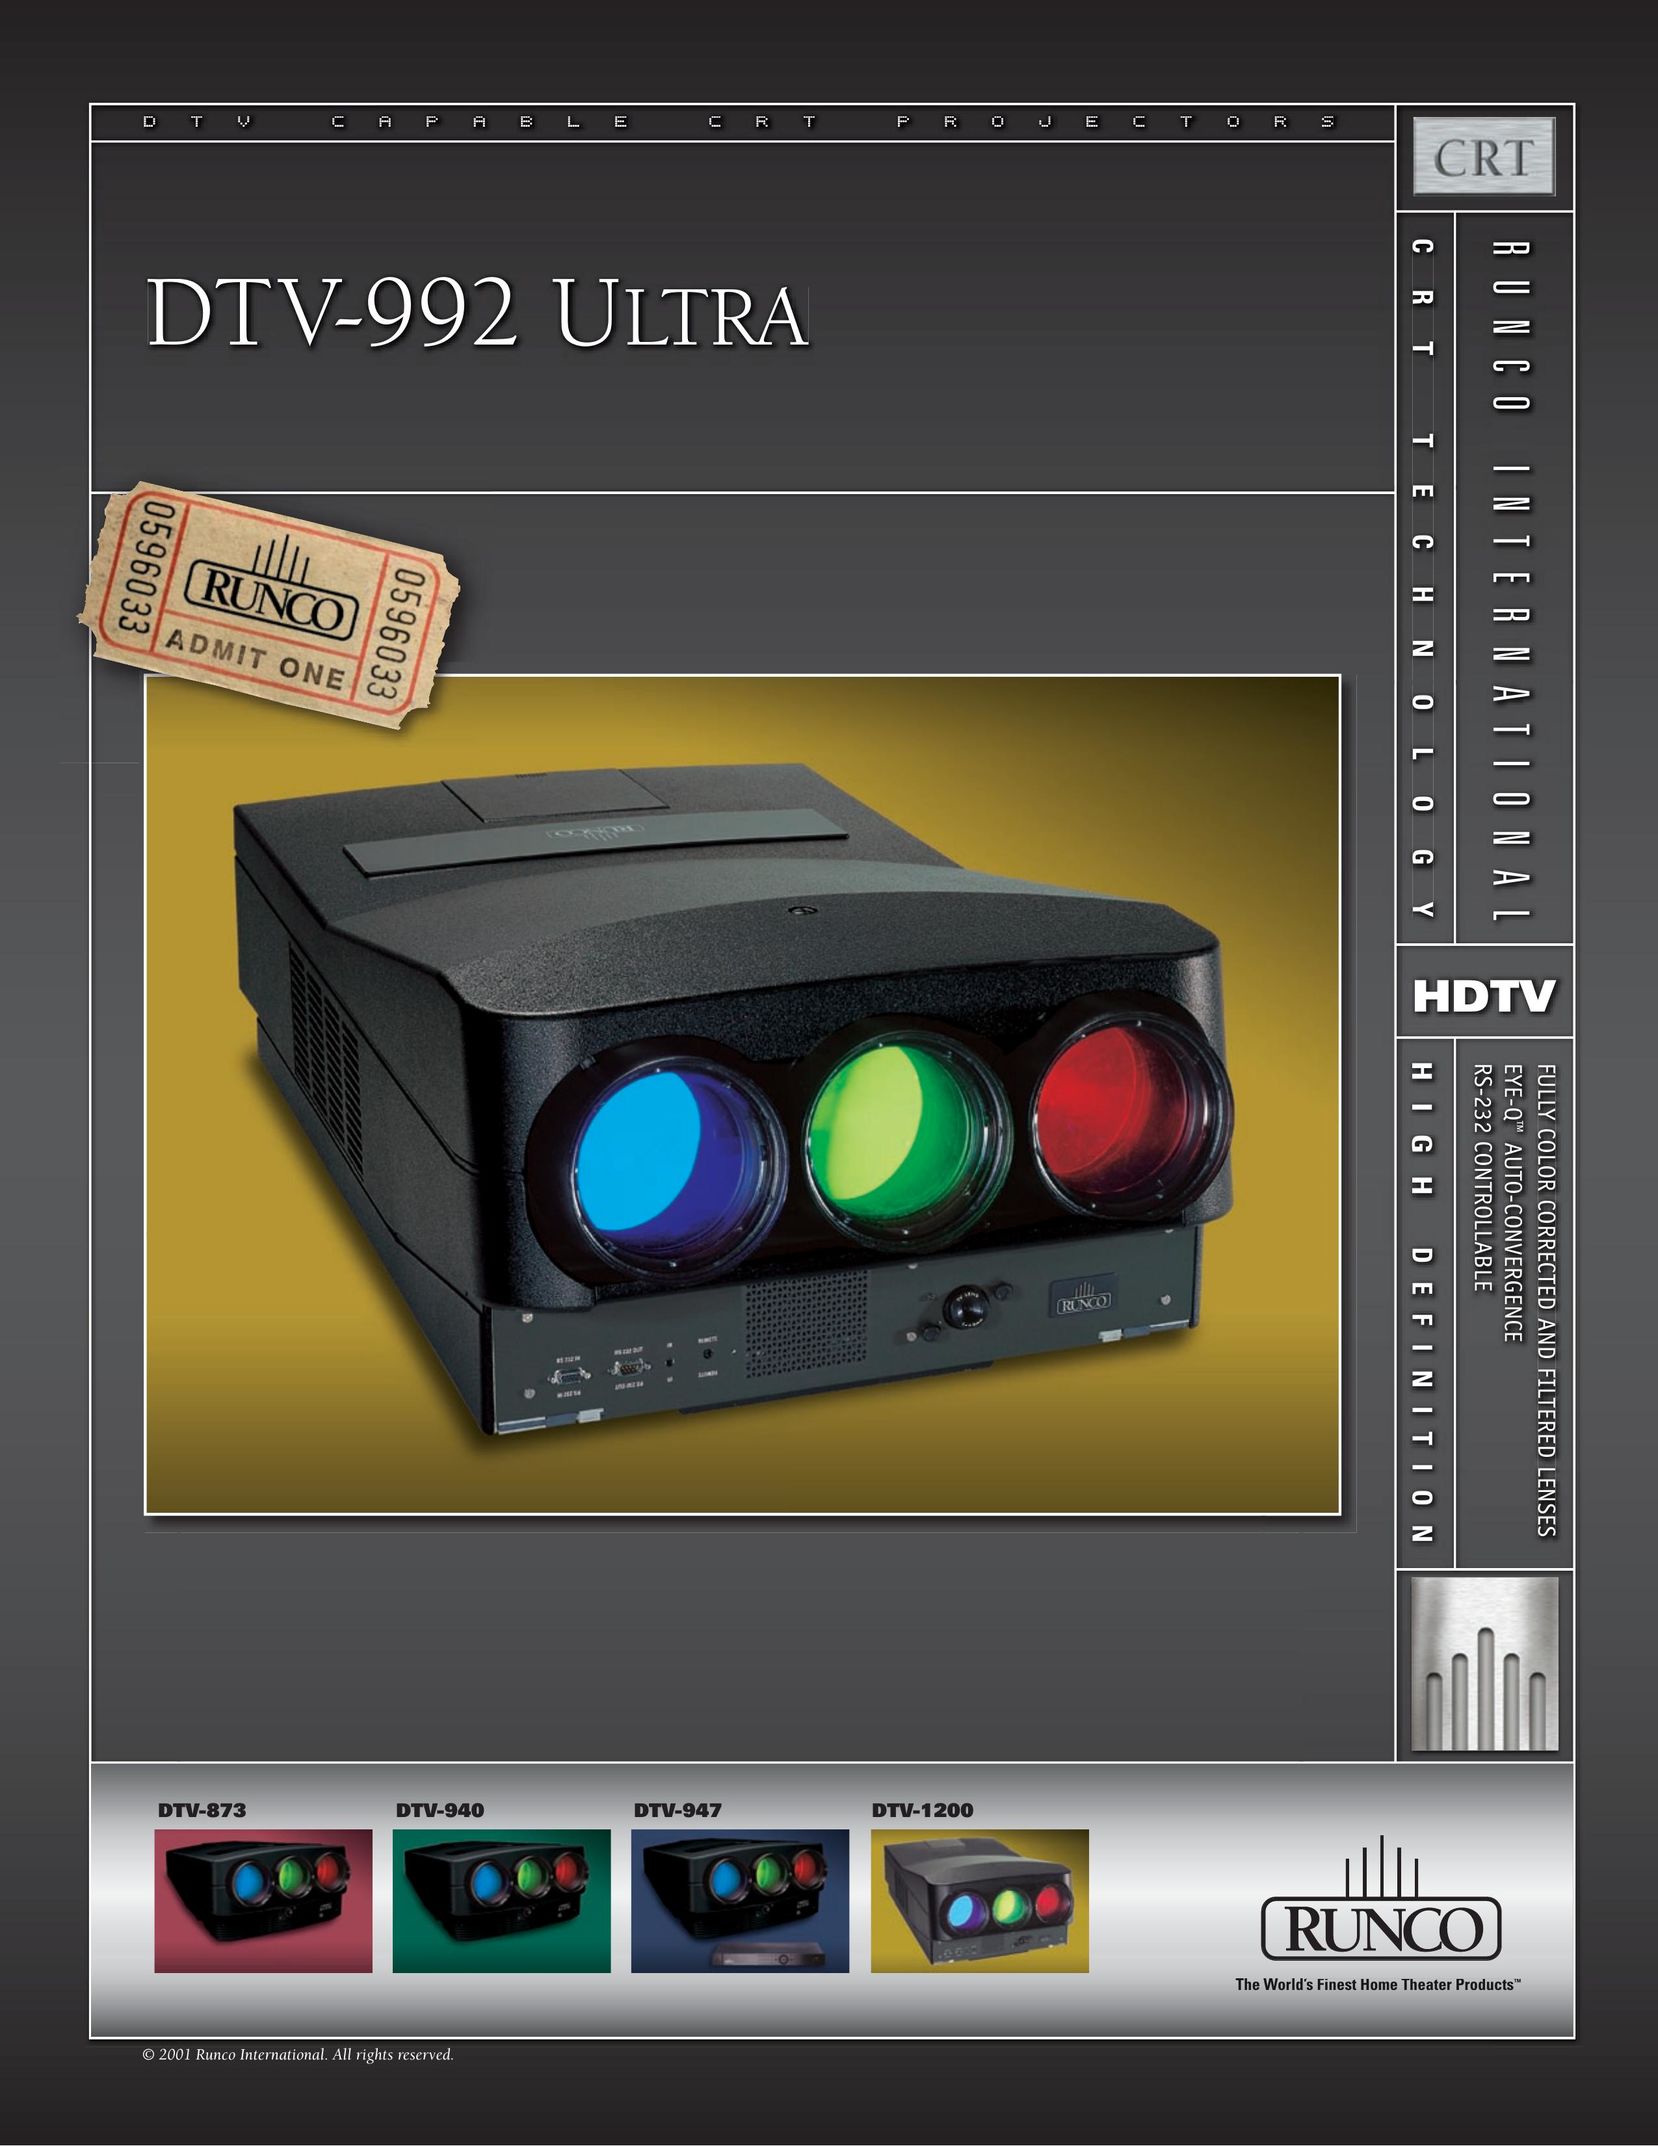 Runco DTV-992 ULTRA CRT Television User Manual